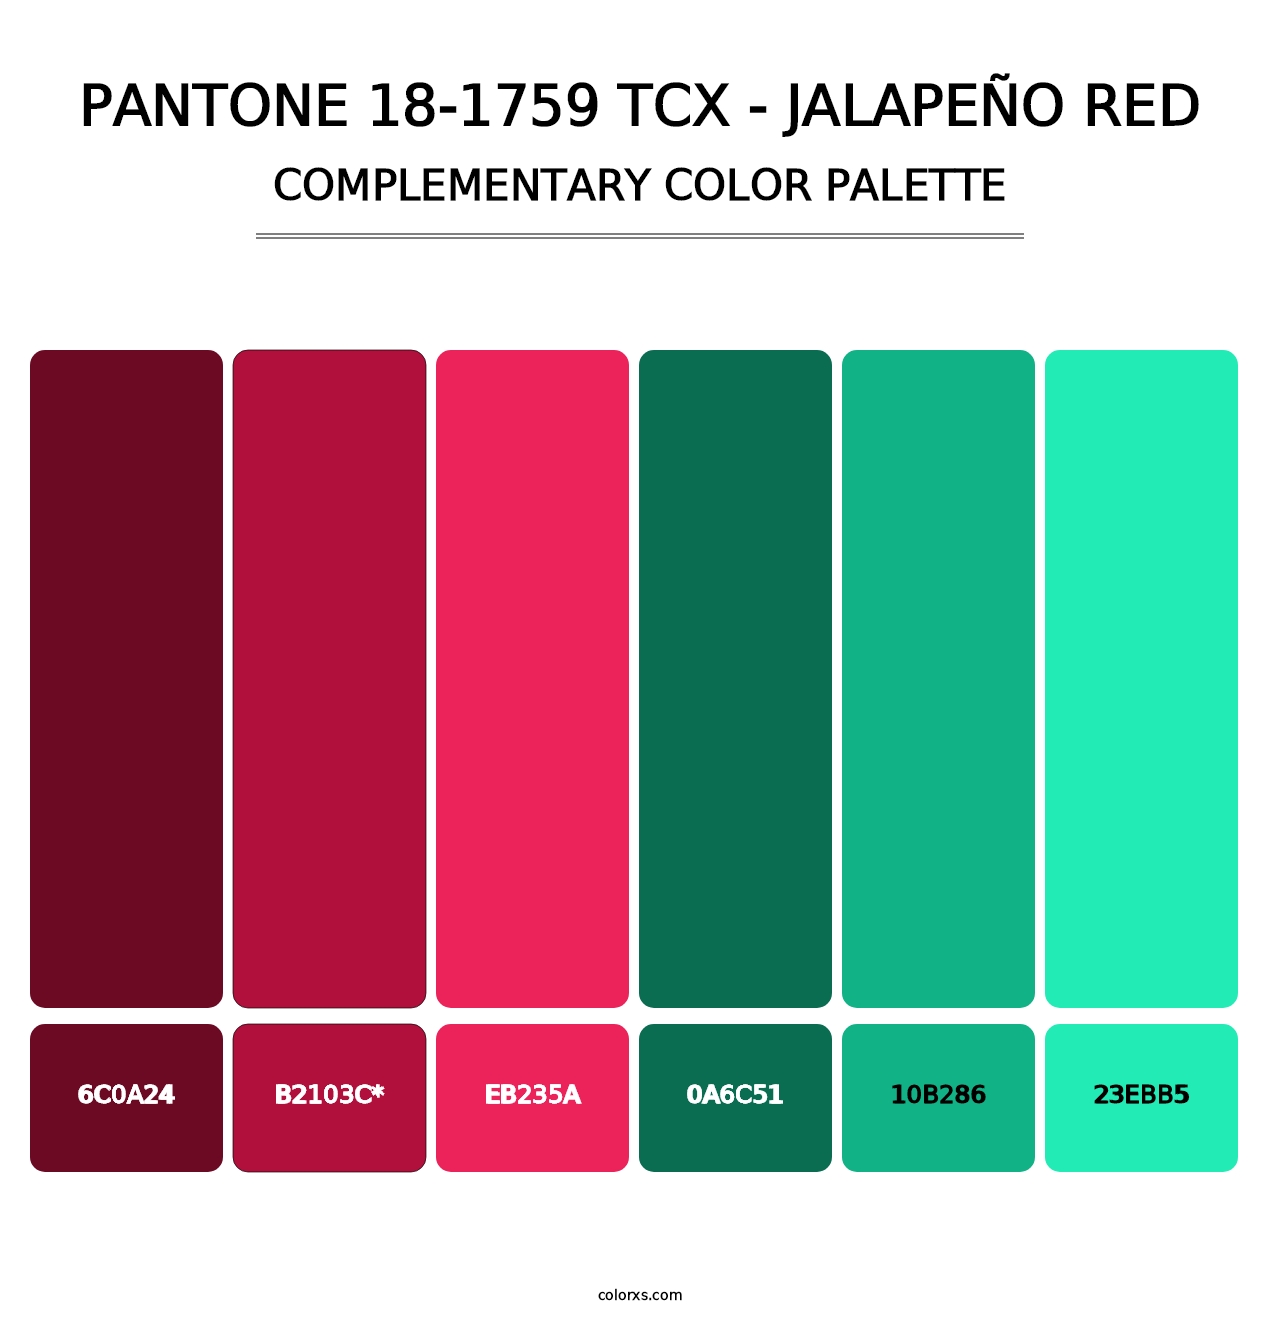 PANTONE 18-1759 TCX - Jalapeño Red - Complementary Color Palette